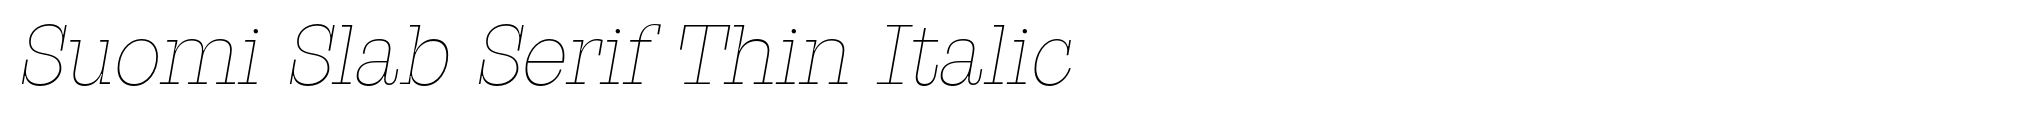 Suomi Slab Serif Thin Italic image